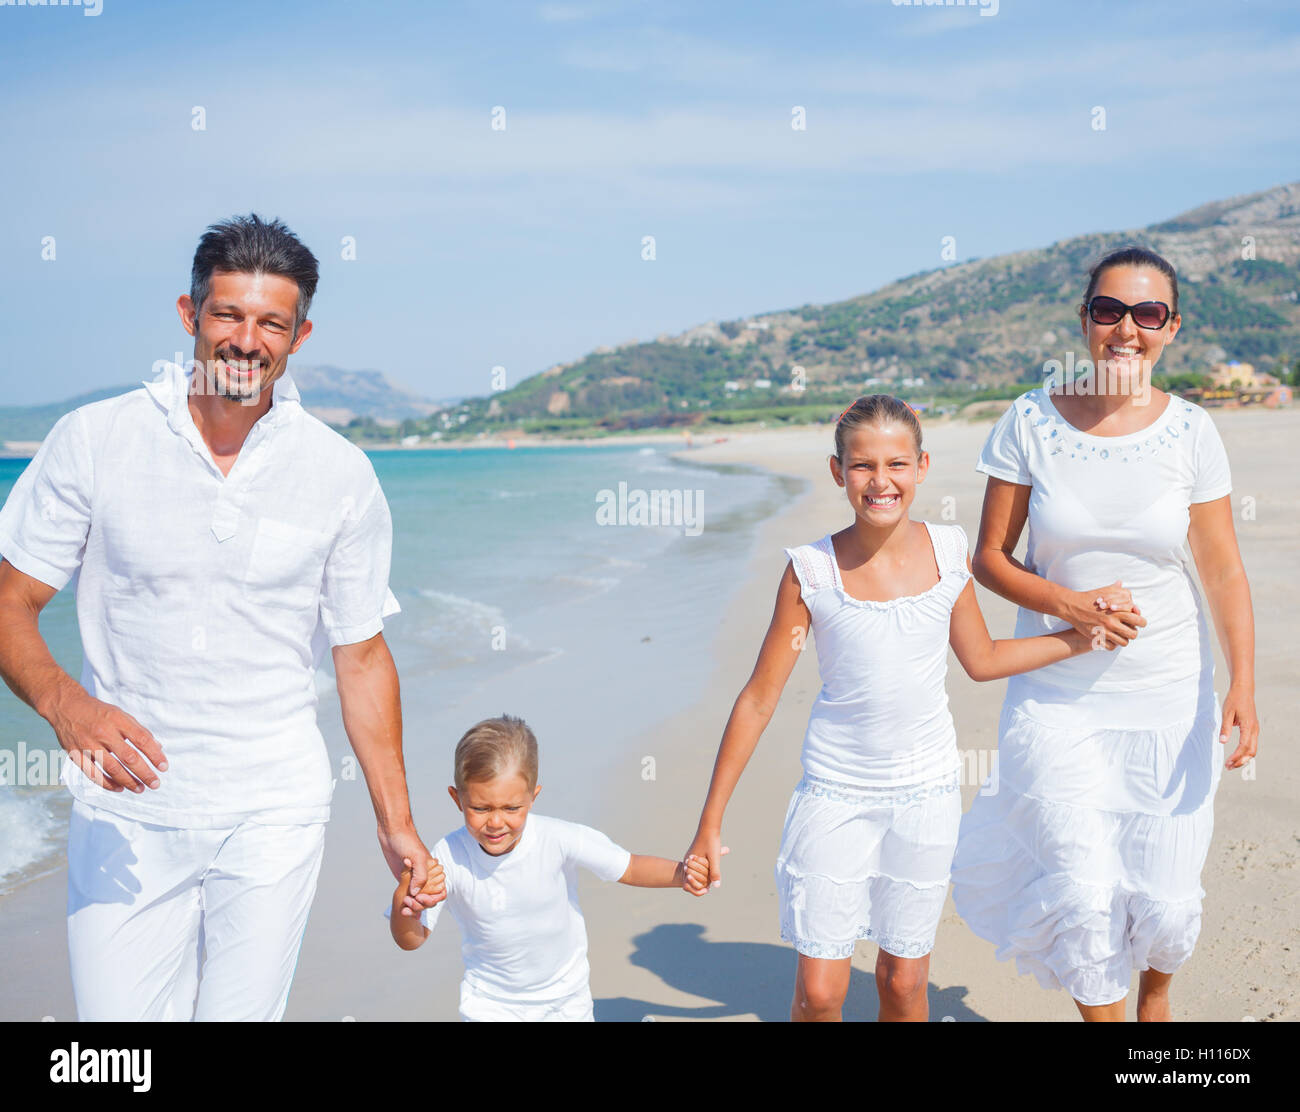 Family having fun on beach Stock Photo